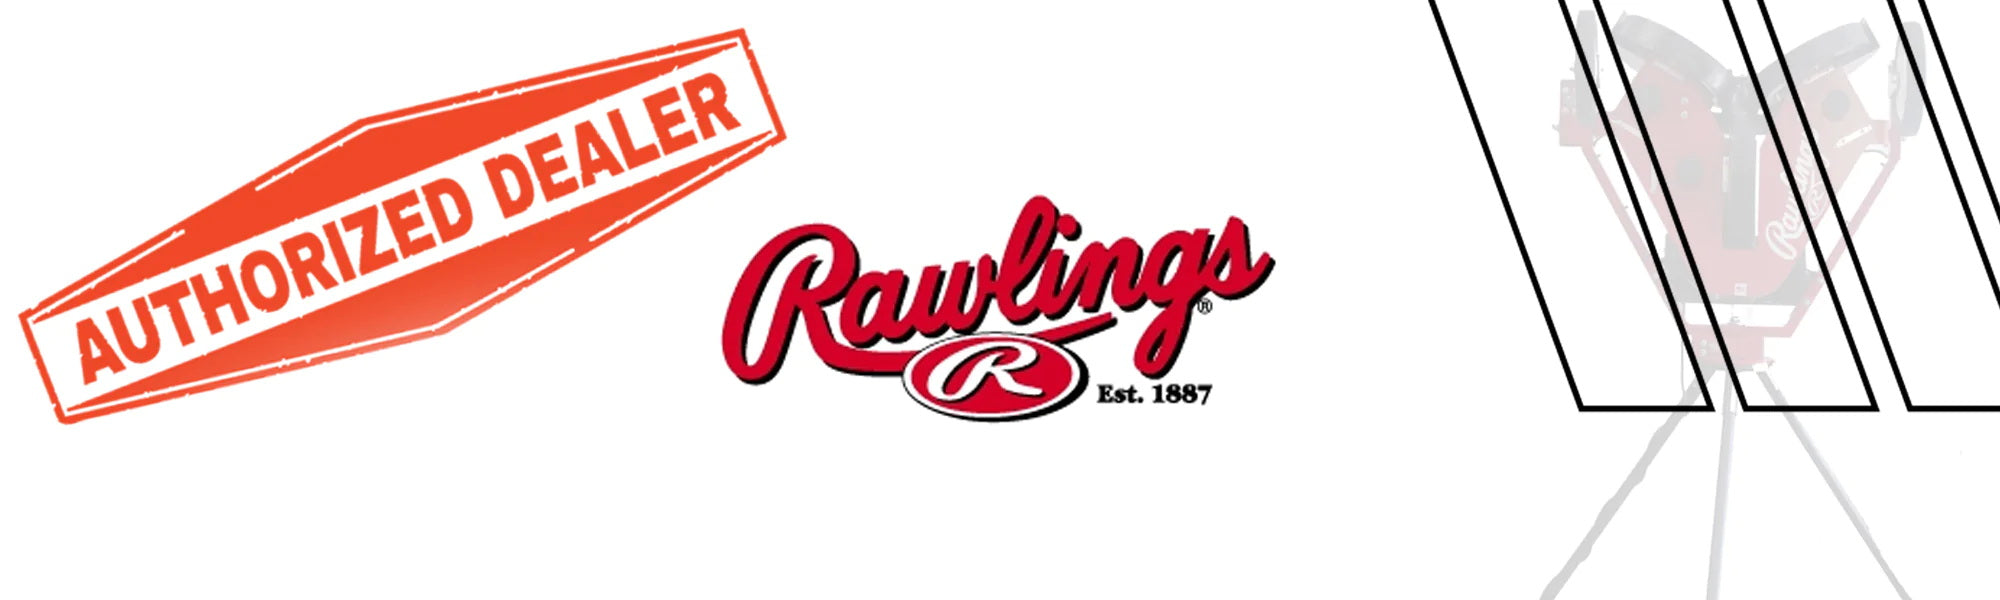 Rawlings Pitching Machines